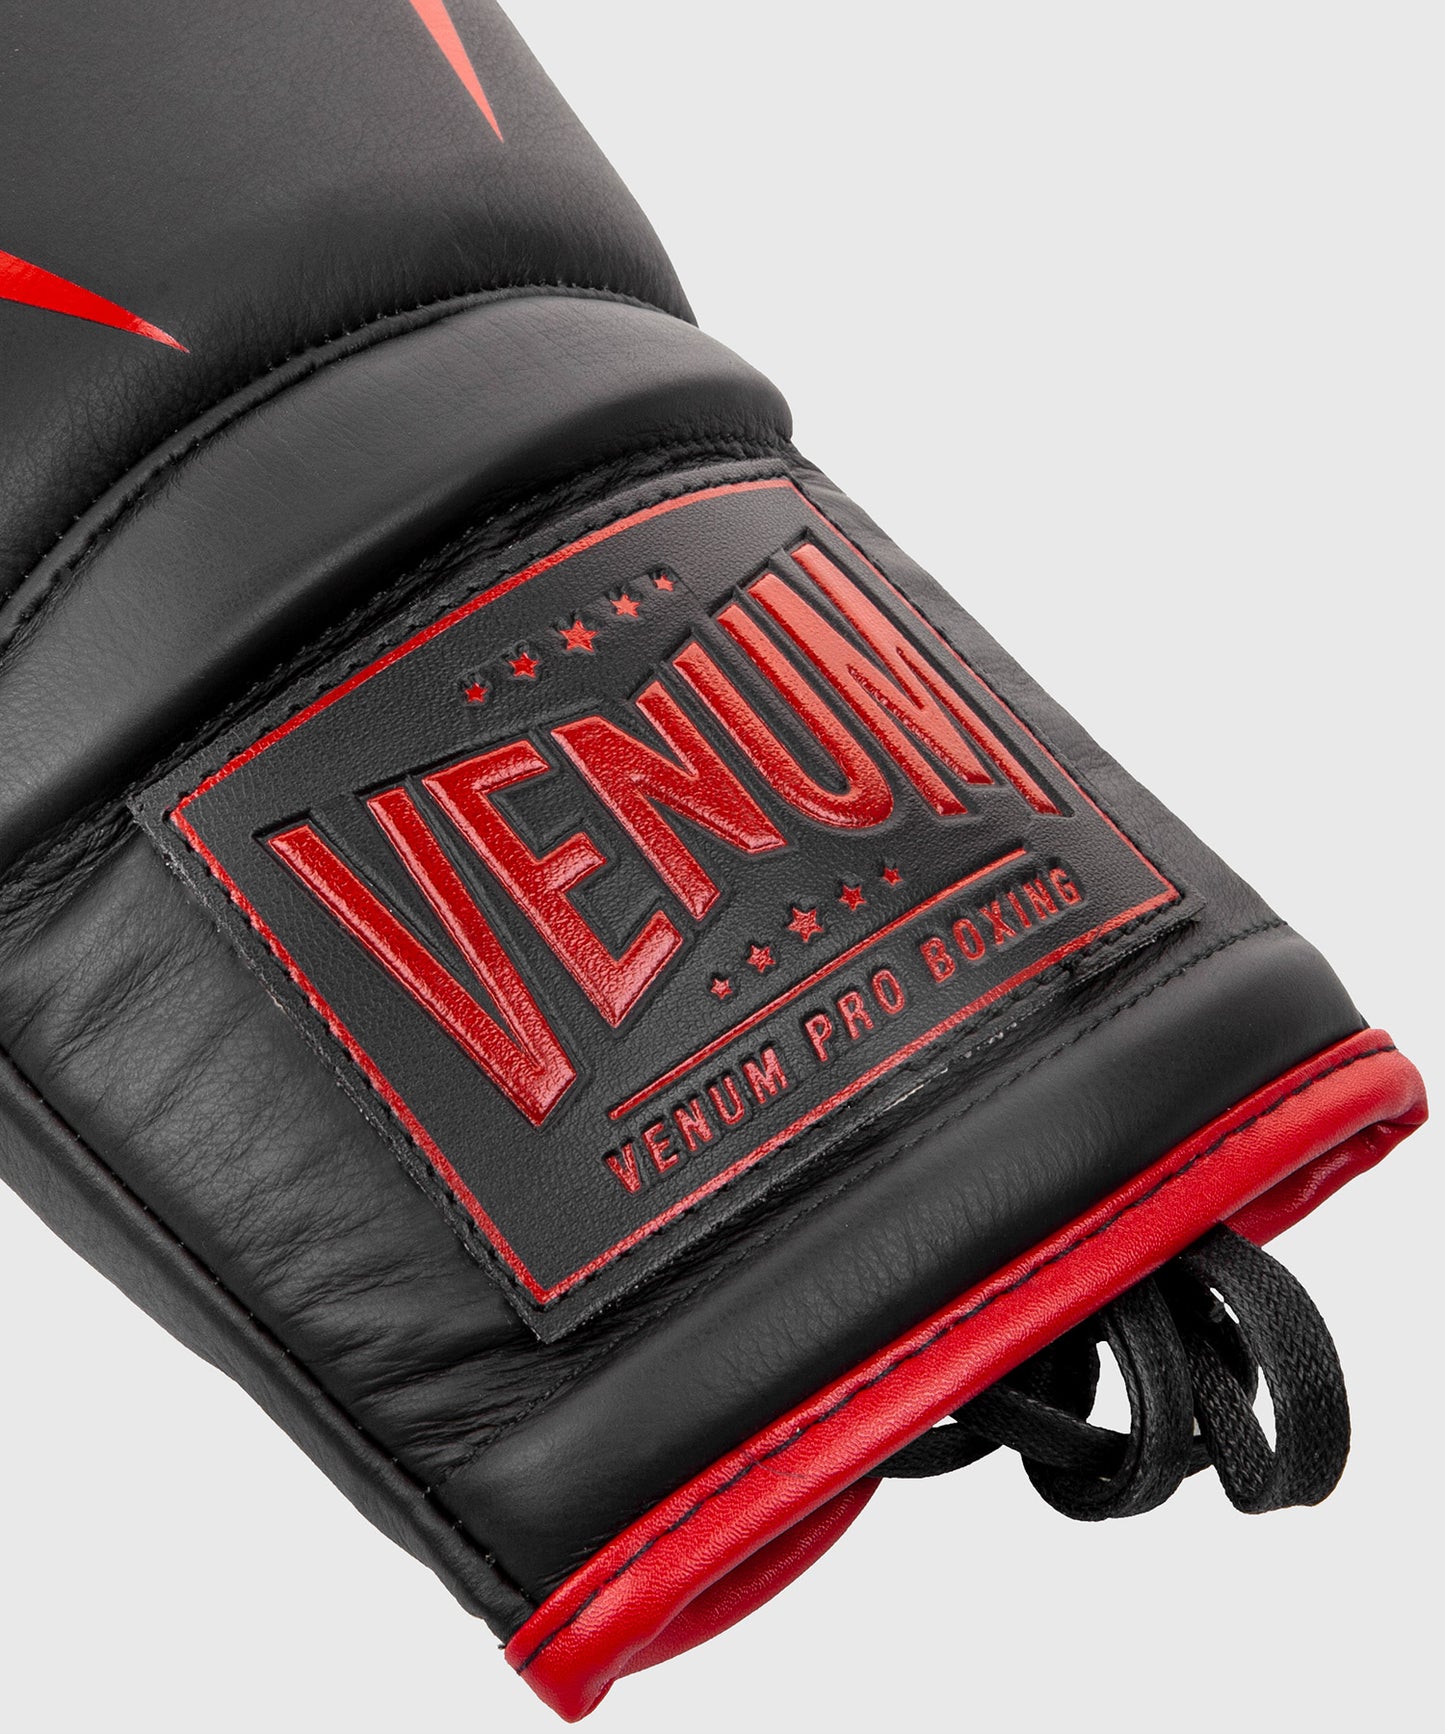 Guantes de Boxeo profesional Venum Giant 2.0  – cordones - Negro/Rojo